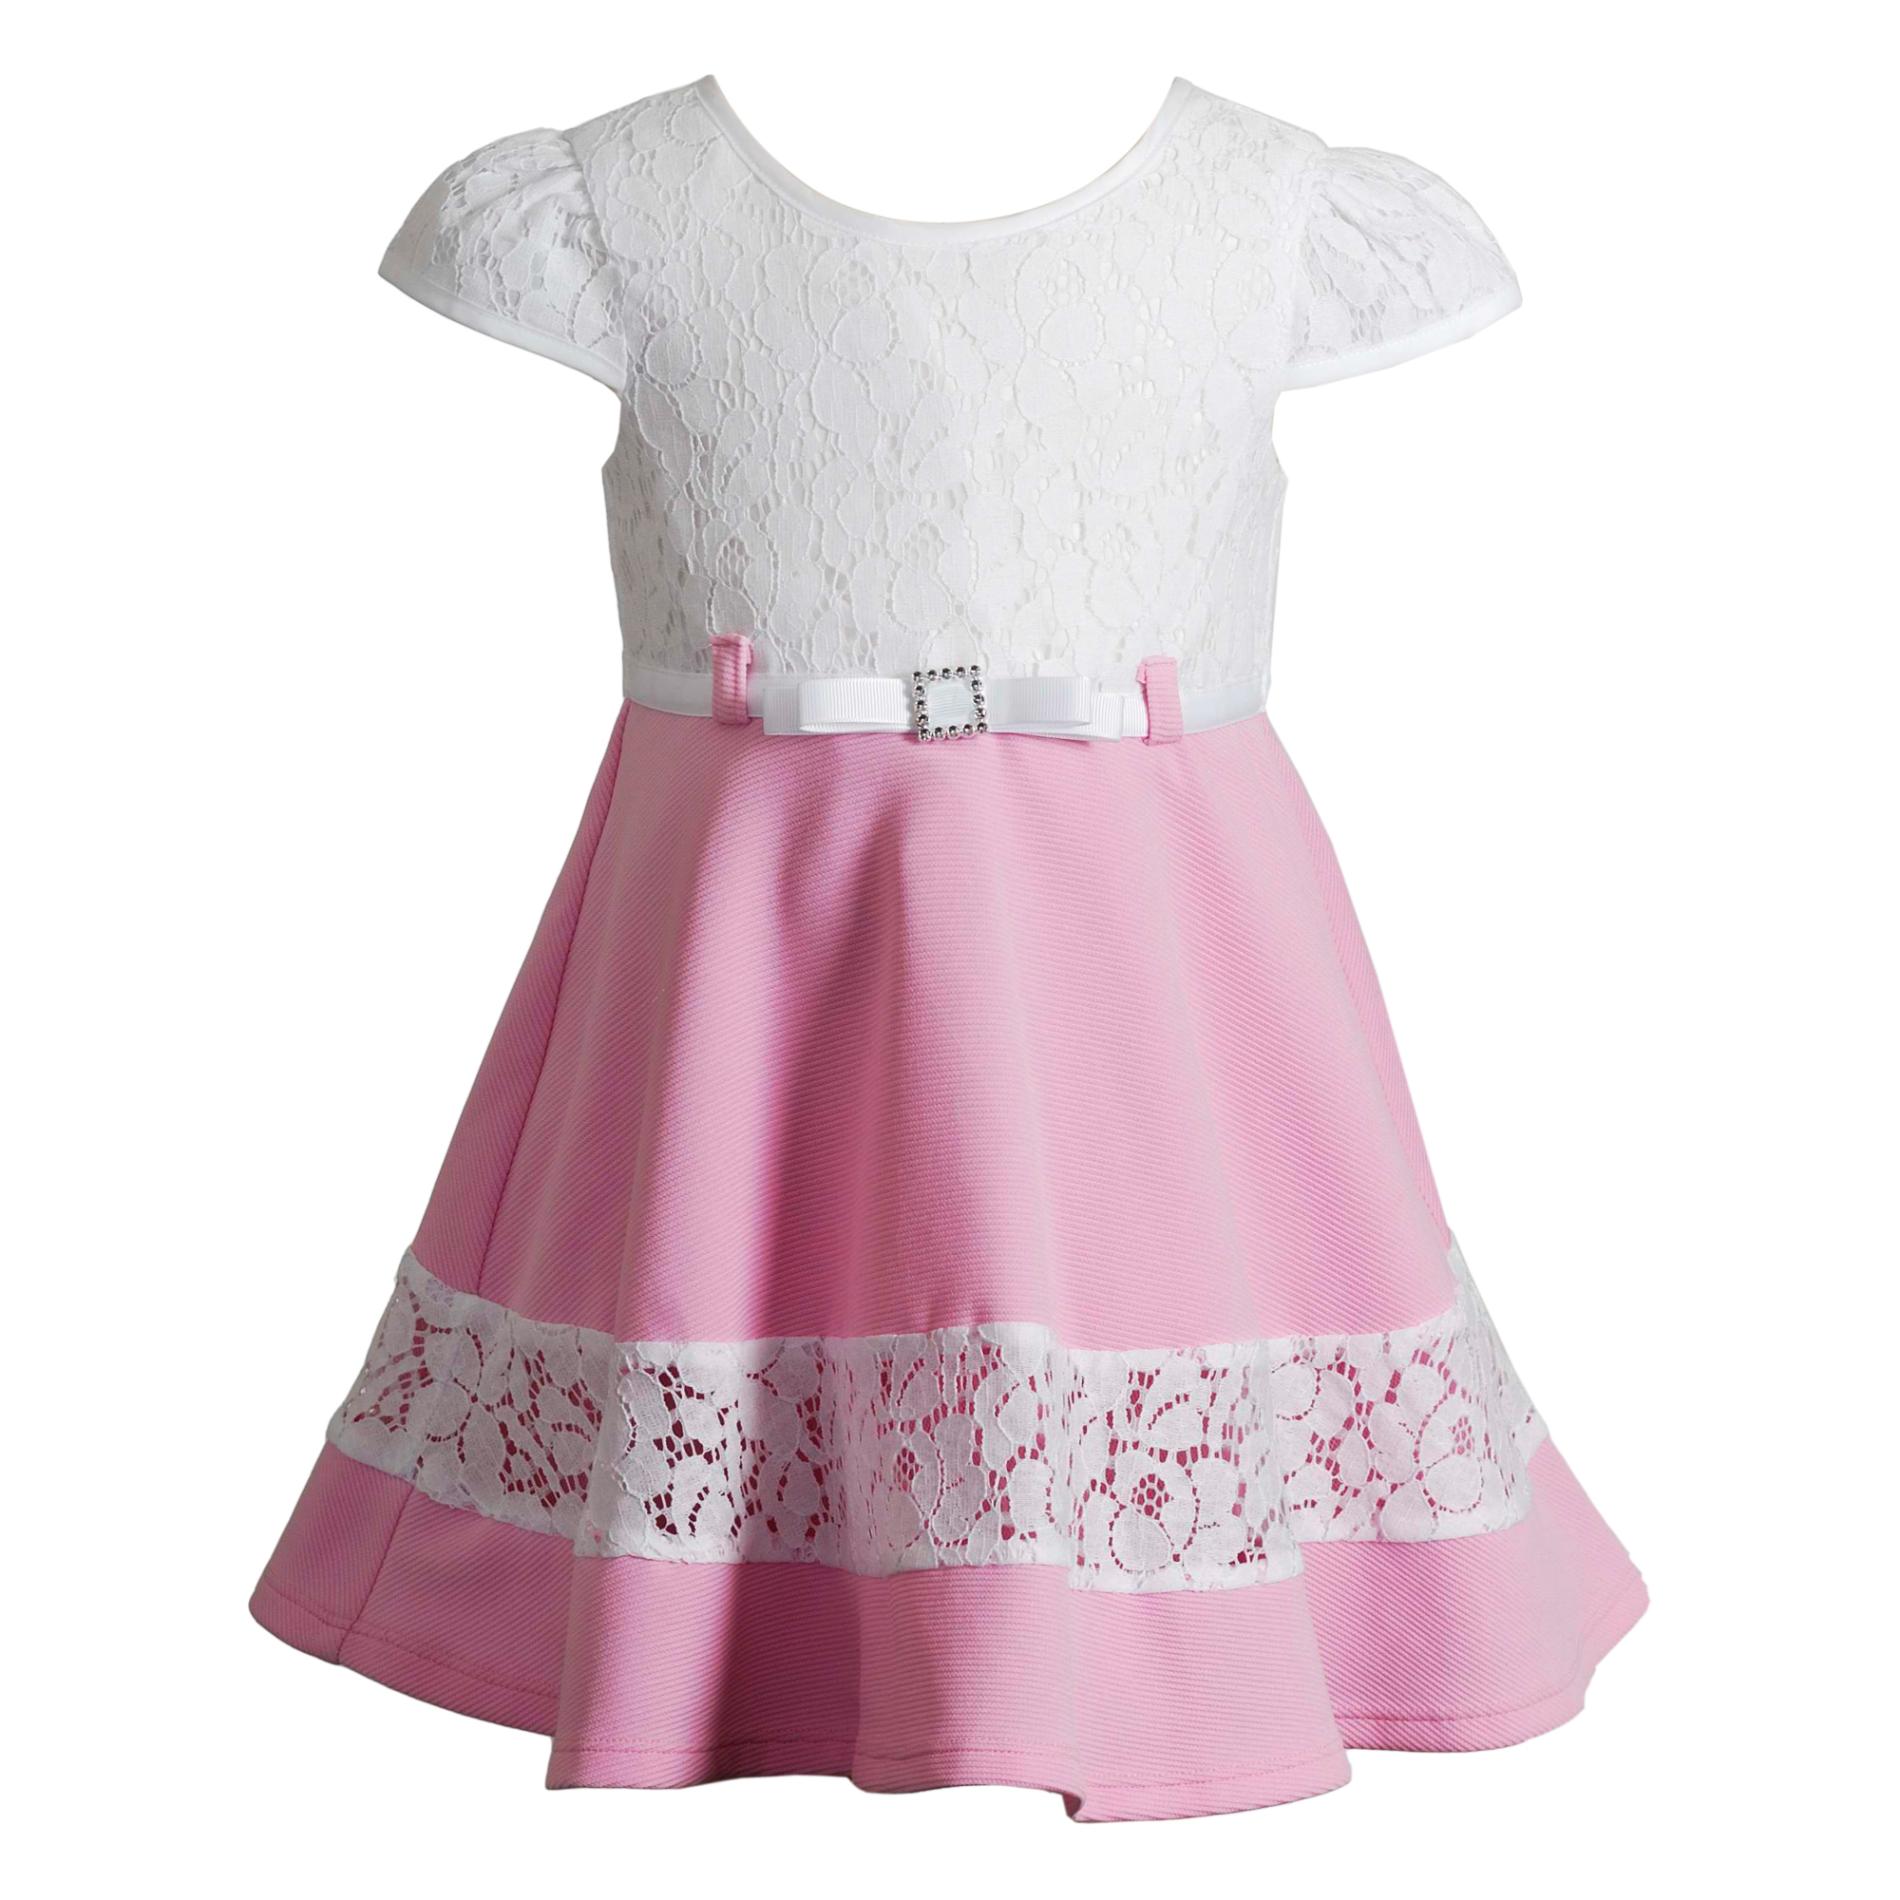 Youngland Infant & Toddler Girl's Cap Sleeve Dress